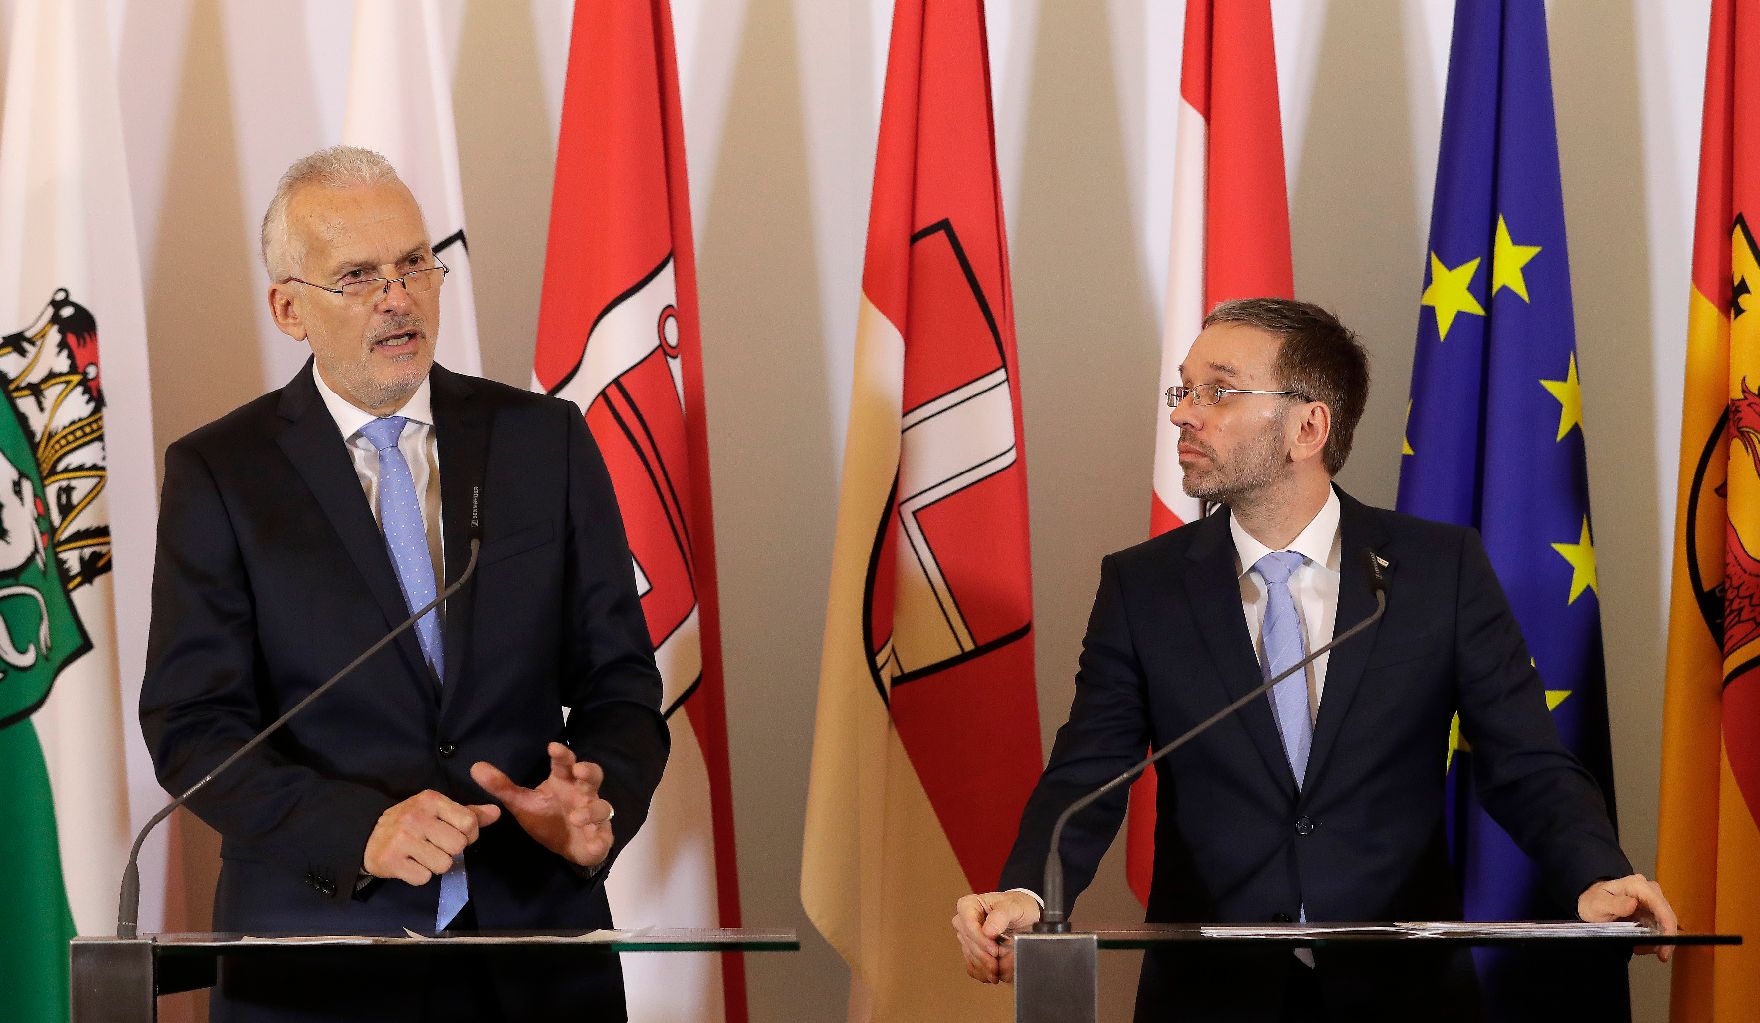 Bundesminister Josef Moser (l.) und Bundesminister Herbert Kickl (r.) beim Pressefoyer nach dem Ministerrat am 21. Februar 2018.